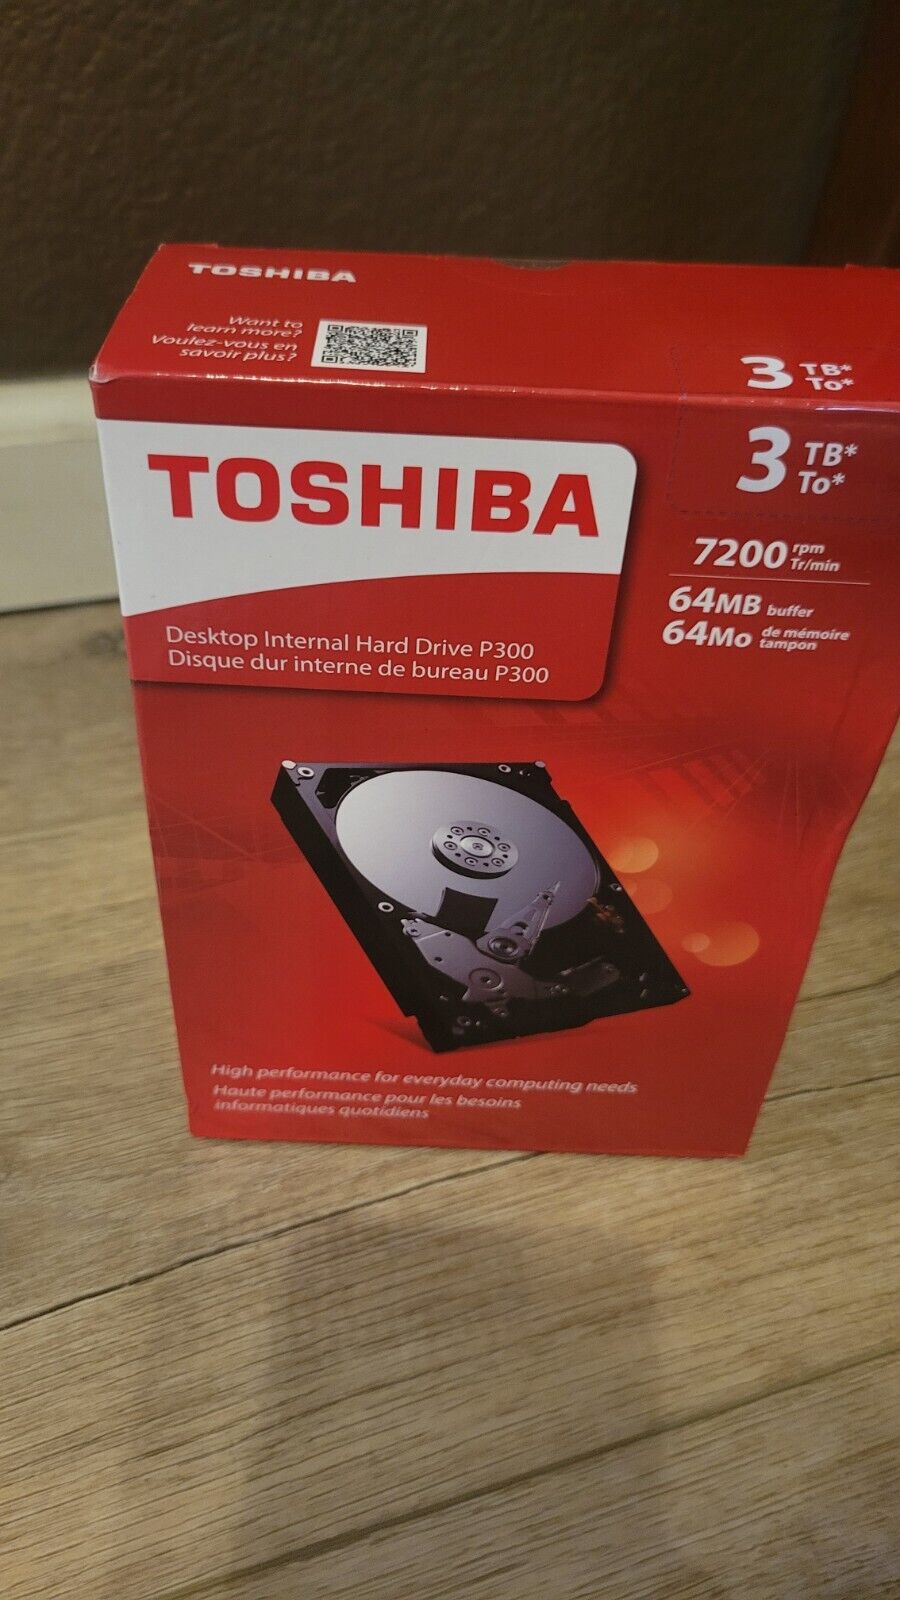 Toshiba desktop internal hard drive P300